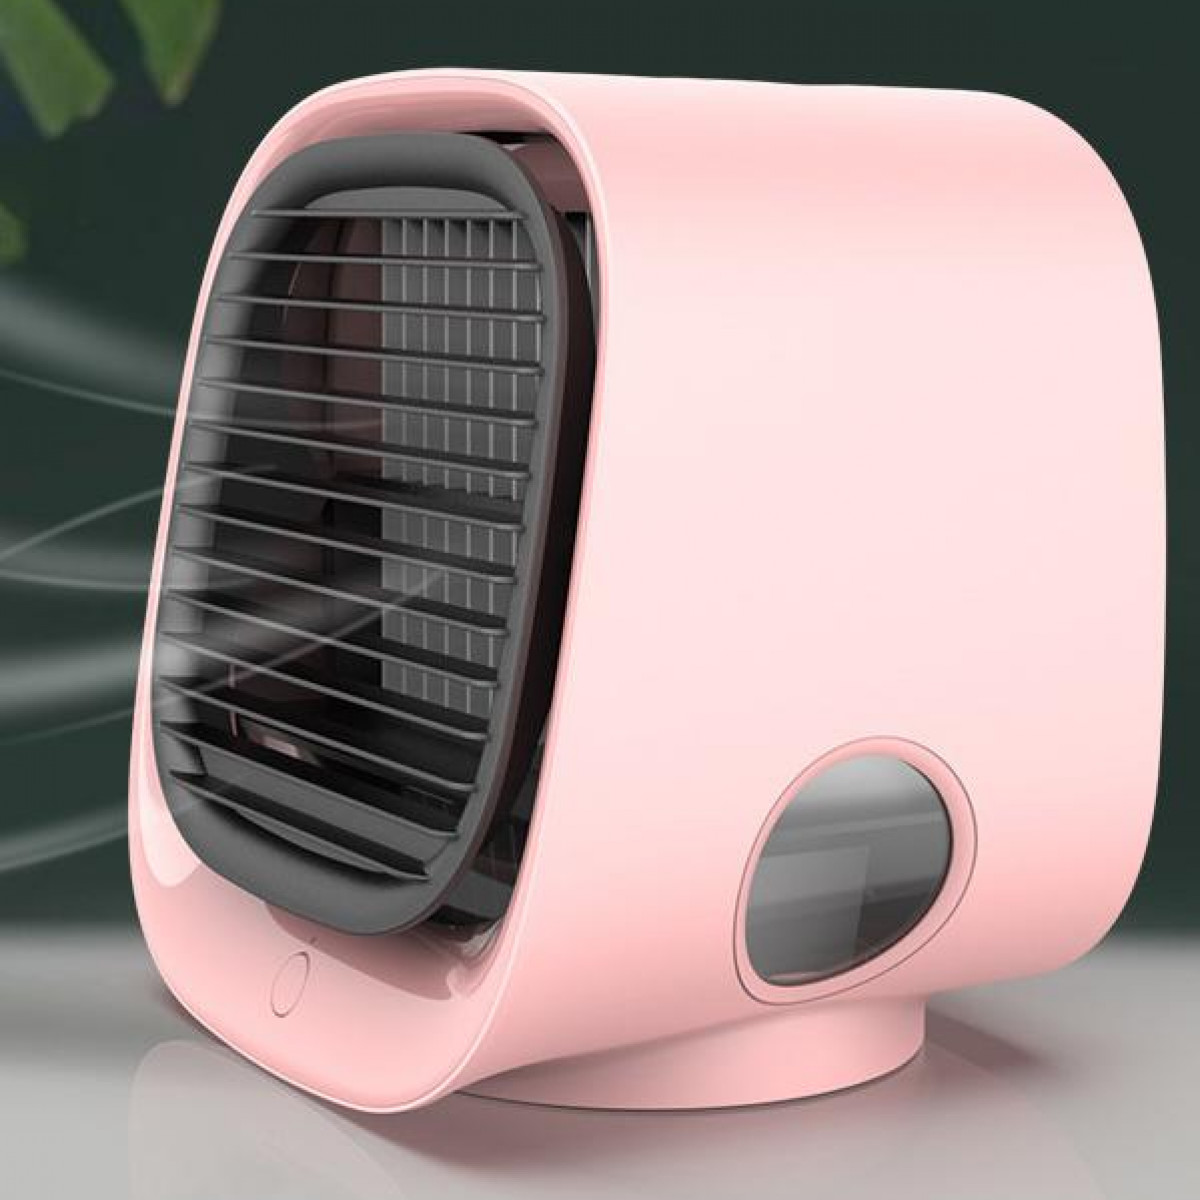 mit m²) 4-in-1-Lüfter Rosa 10 INF Luftkühler (Raumgröße: / Luftbefeuchter Rosa LED Luftkühler / Luftreiniger